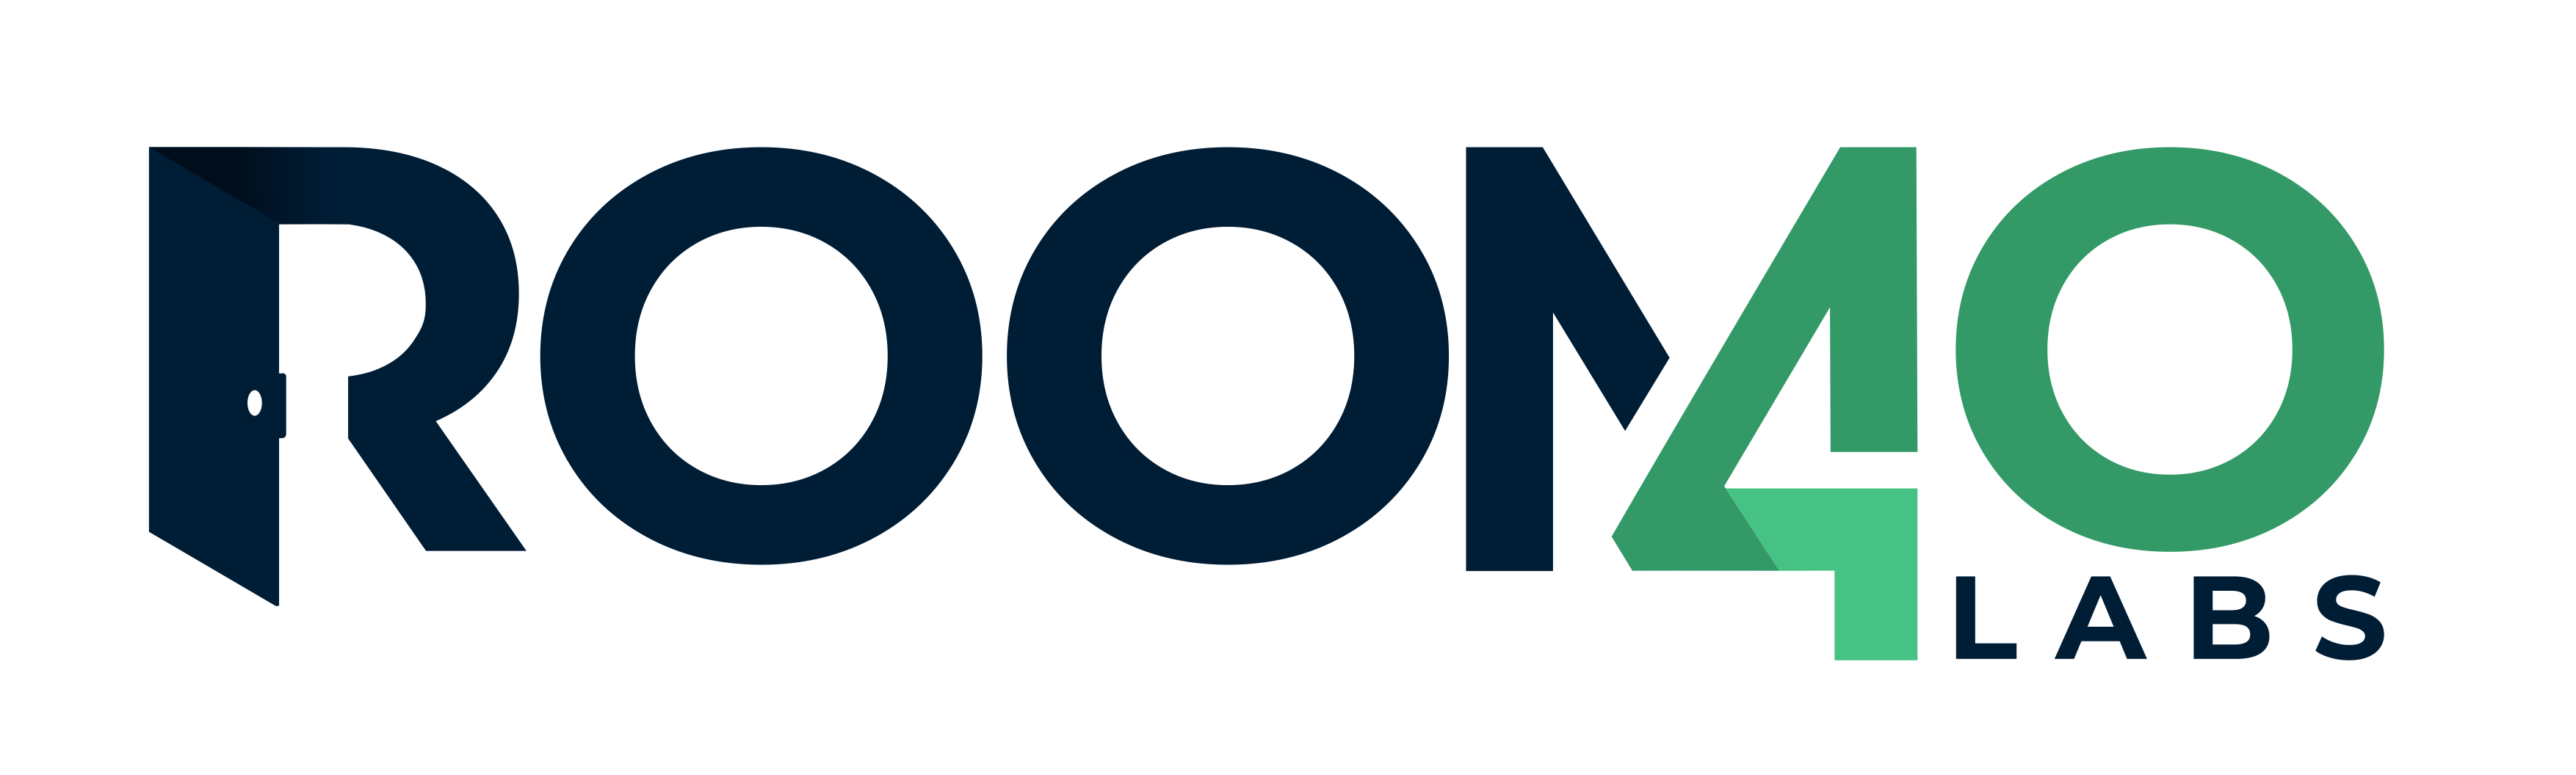 Logo Room40 Labs